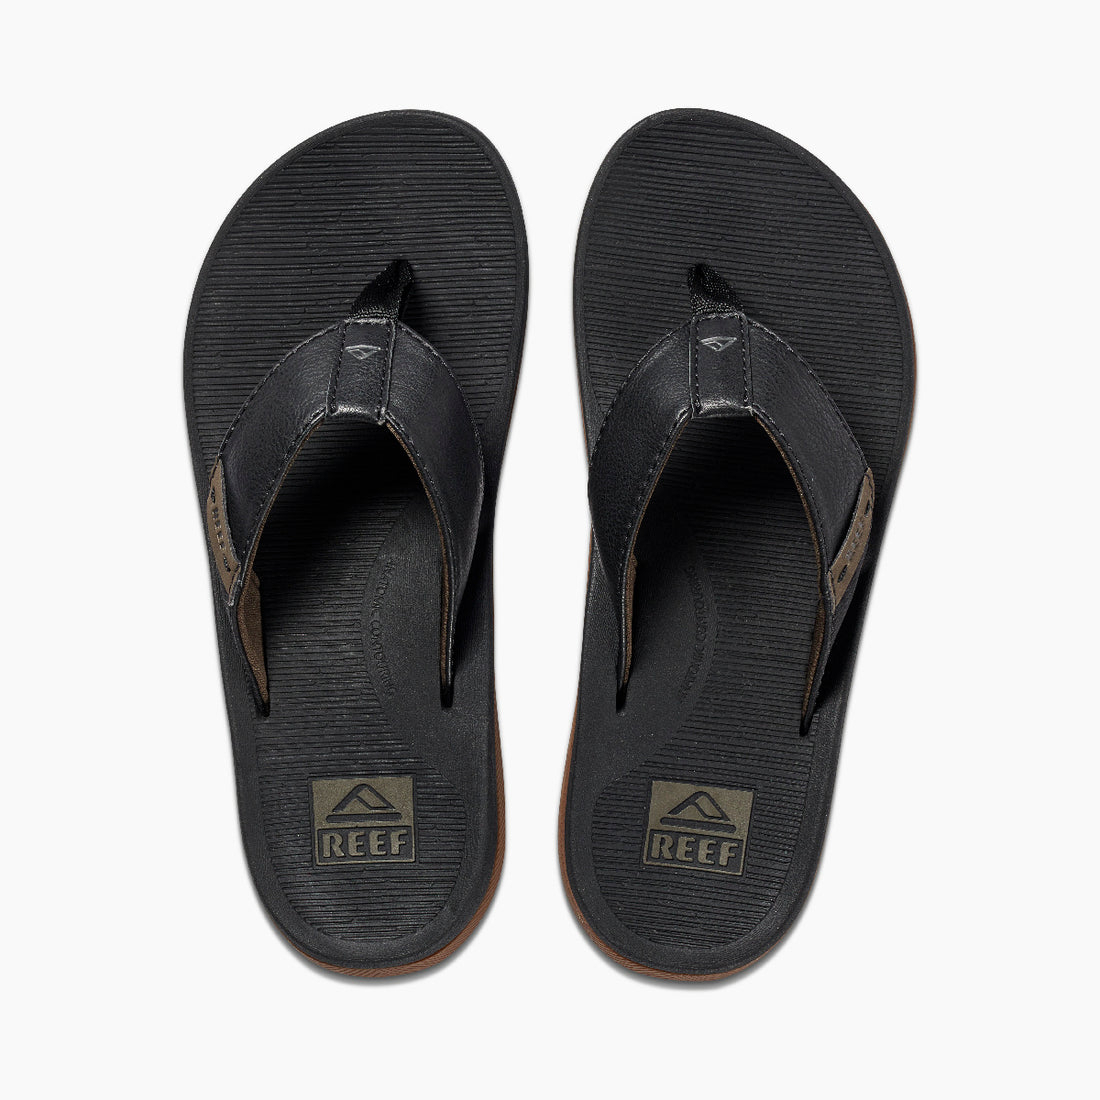 REEF Men's Santa Ana Flip Flop Sandals Black - CI4650 BLACK - BLACK, 8